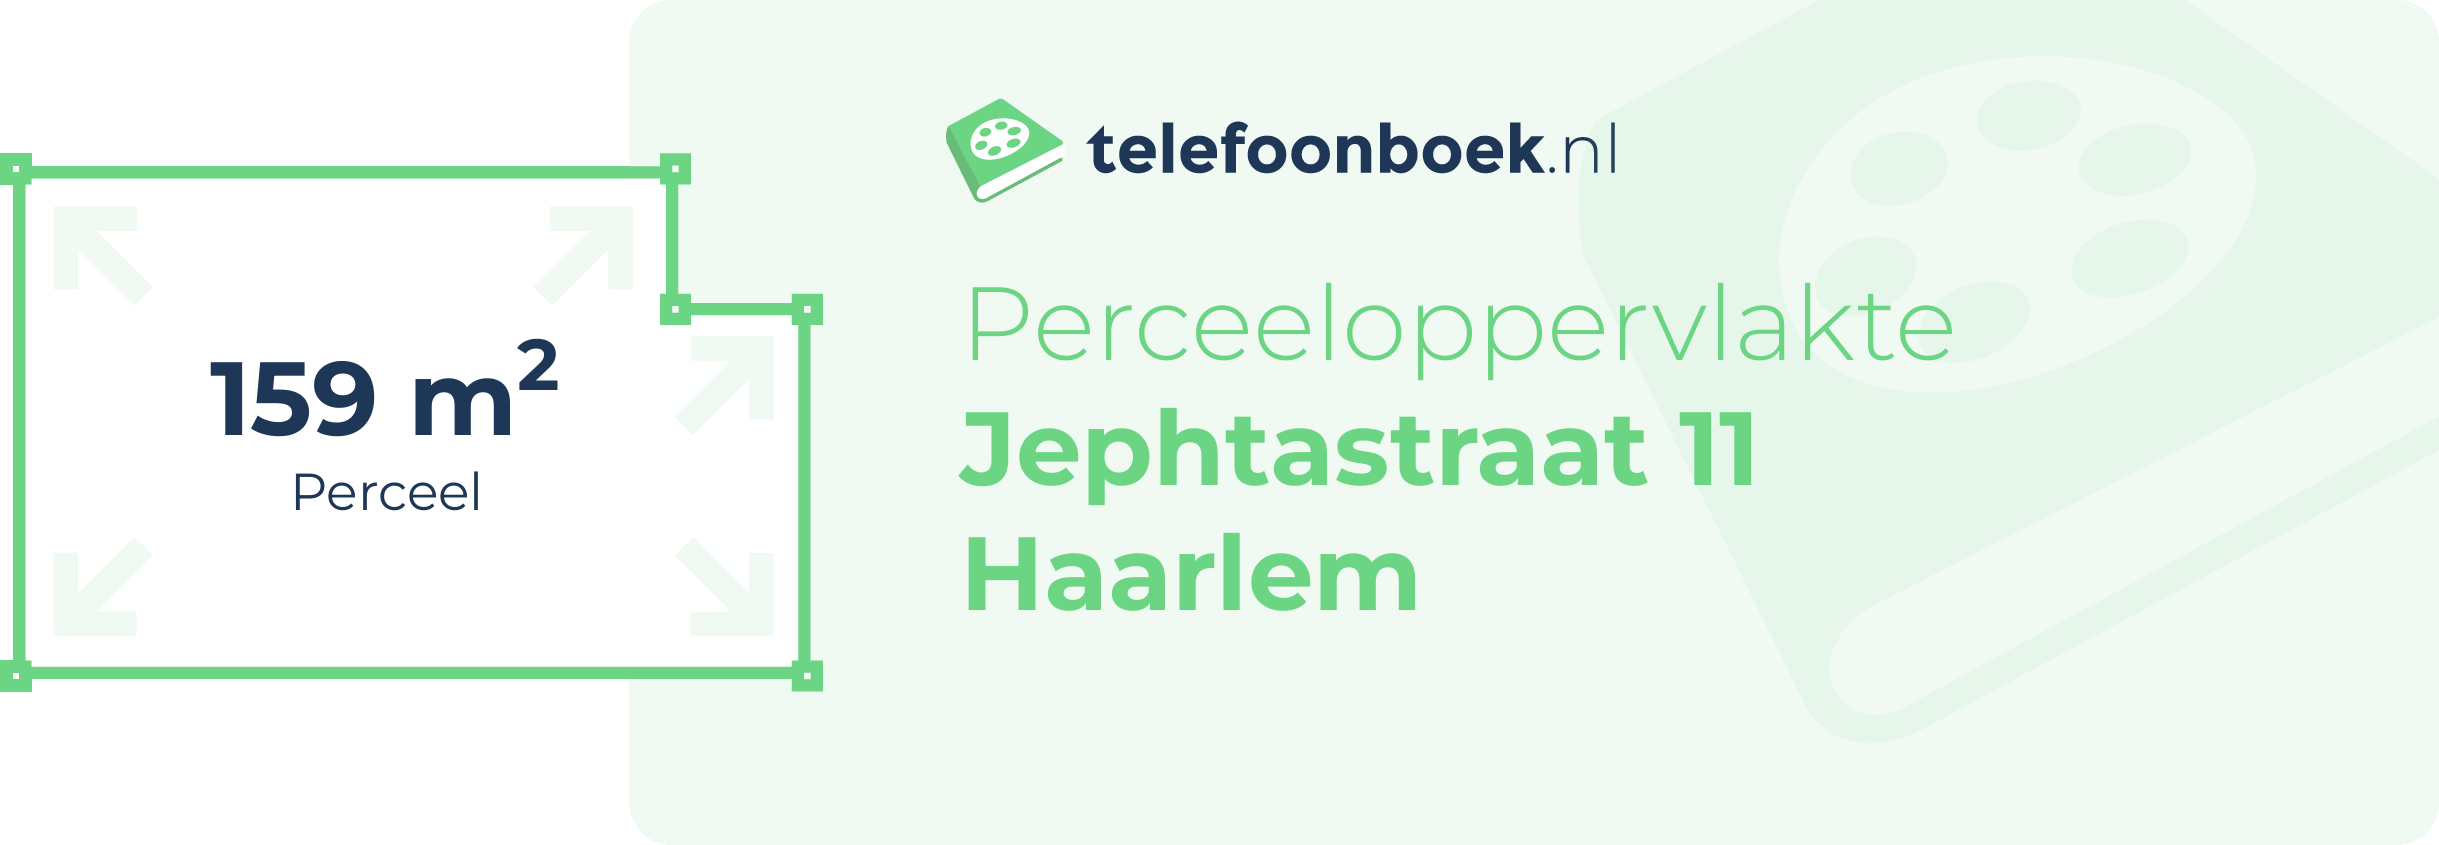 Perceeloppervlakte Jephtastraat 11 Haarlem